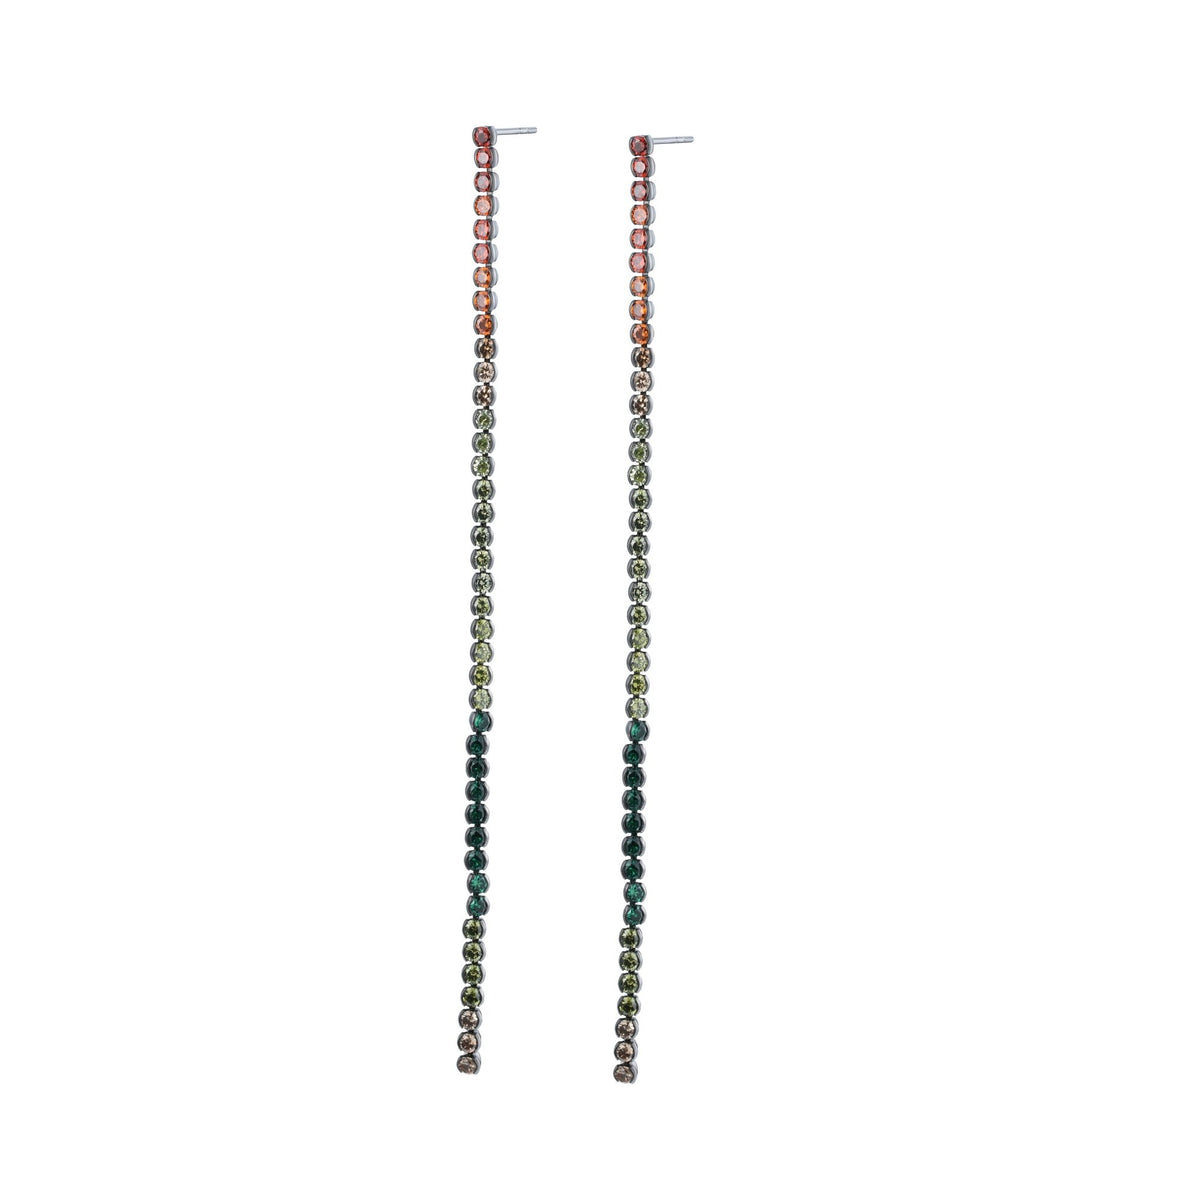 Ferentina | Macaron Earrings | 925 Silver | Multicolor CZ | Black Rhodium Plated